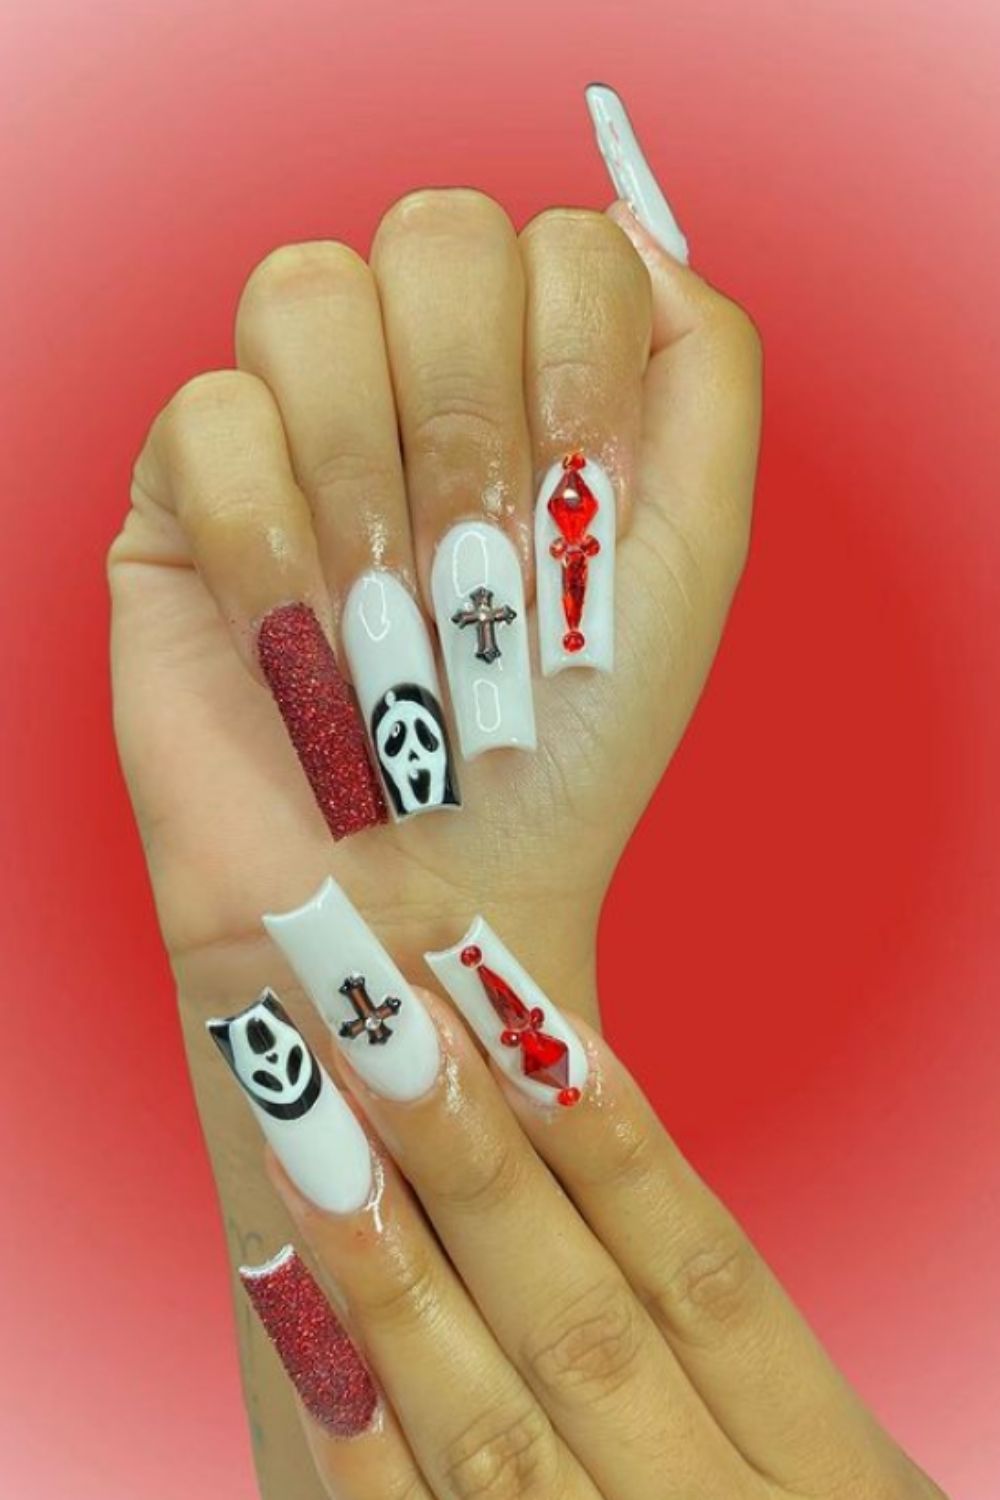 Stylish Halloween nails with rhinestones